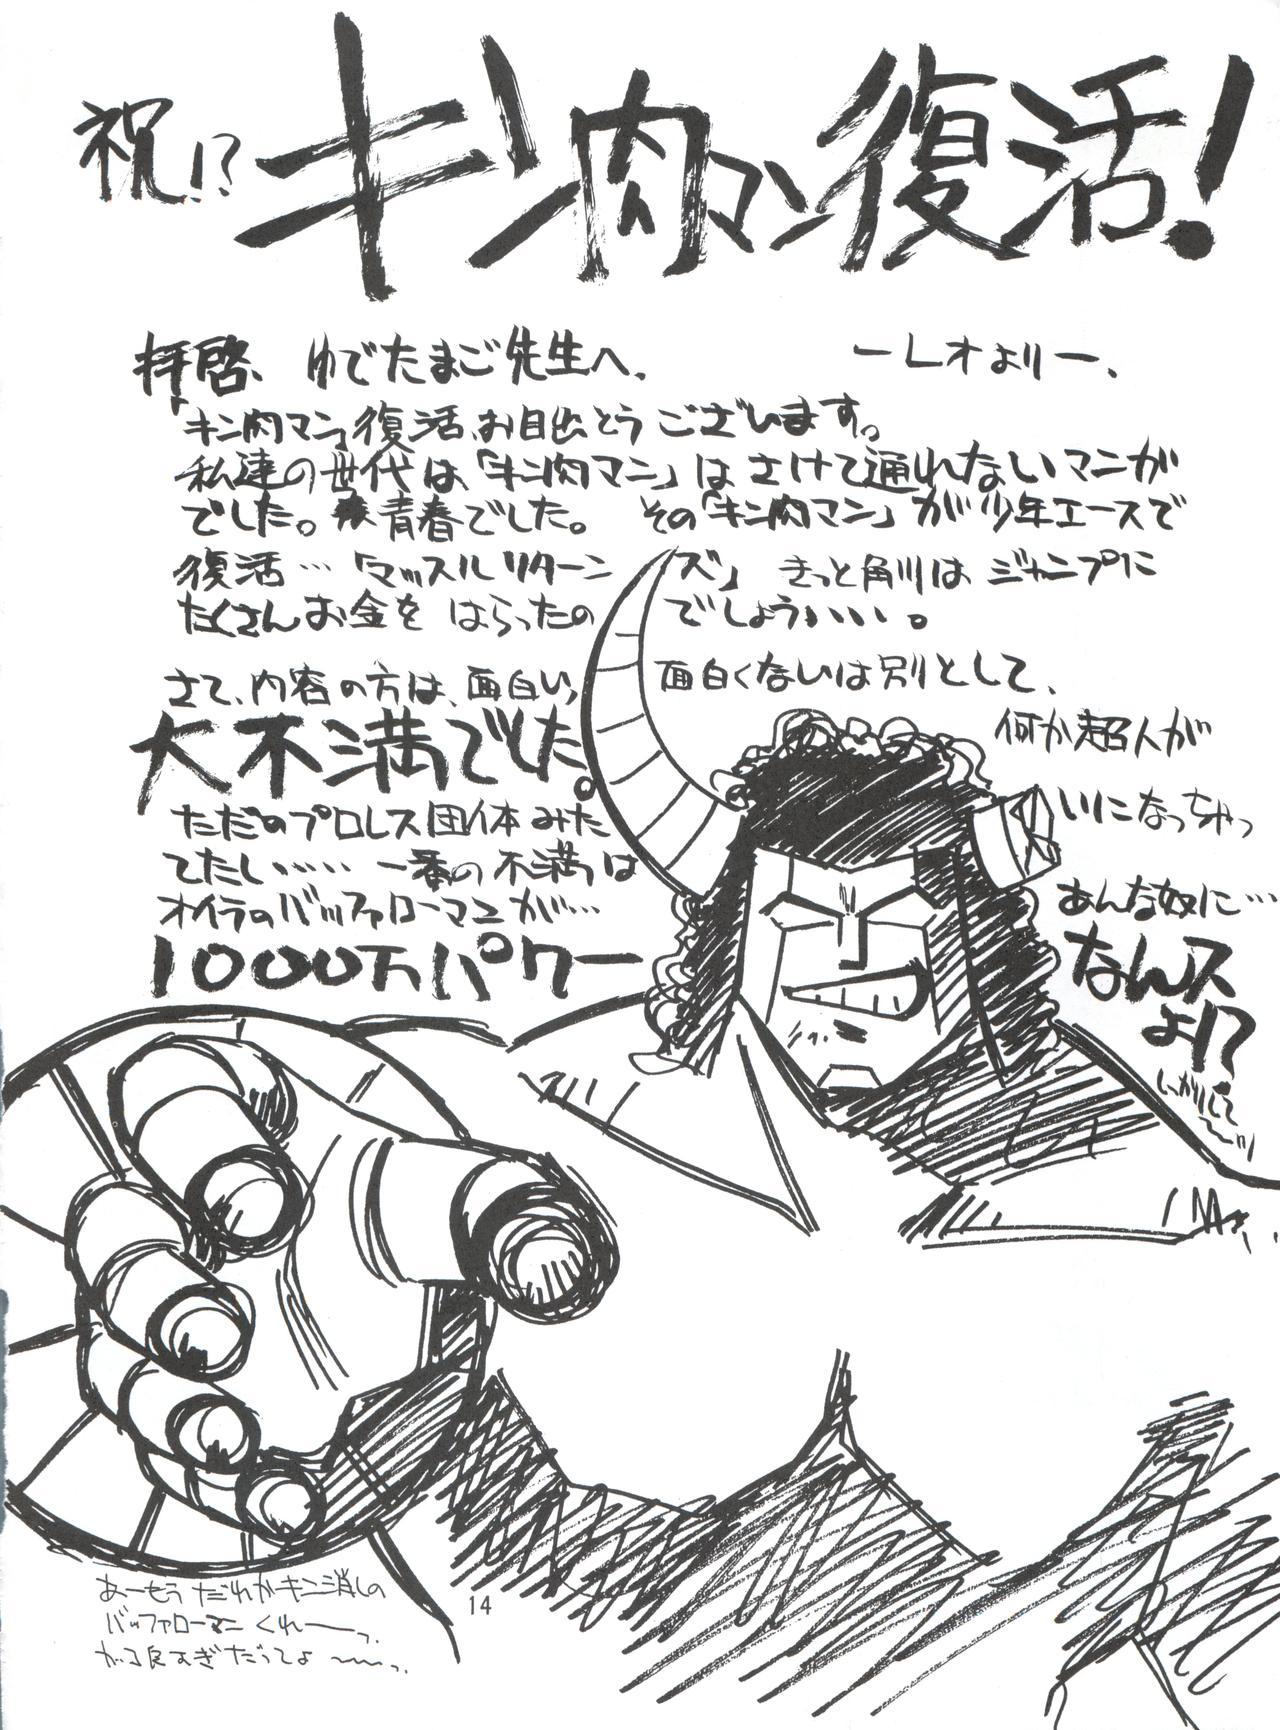 Blow Job KAISHAKU 2010 - Neon genesis evangelion Magic knight rayearth Tobe isami El hazard Fighting vipers Ink - Page 13